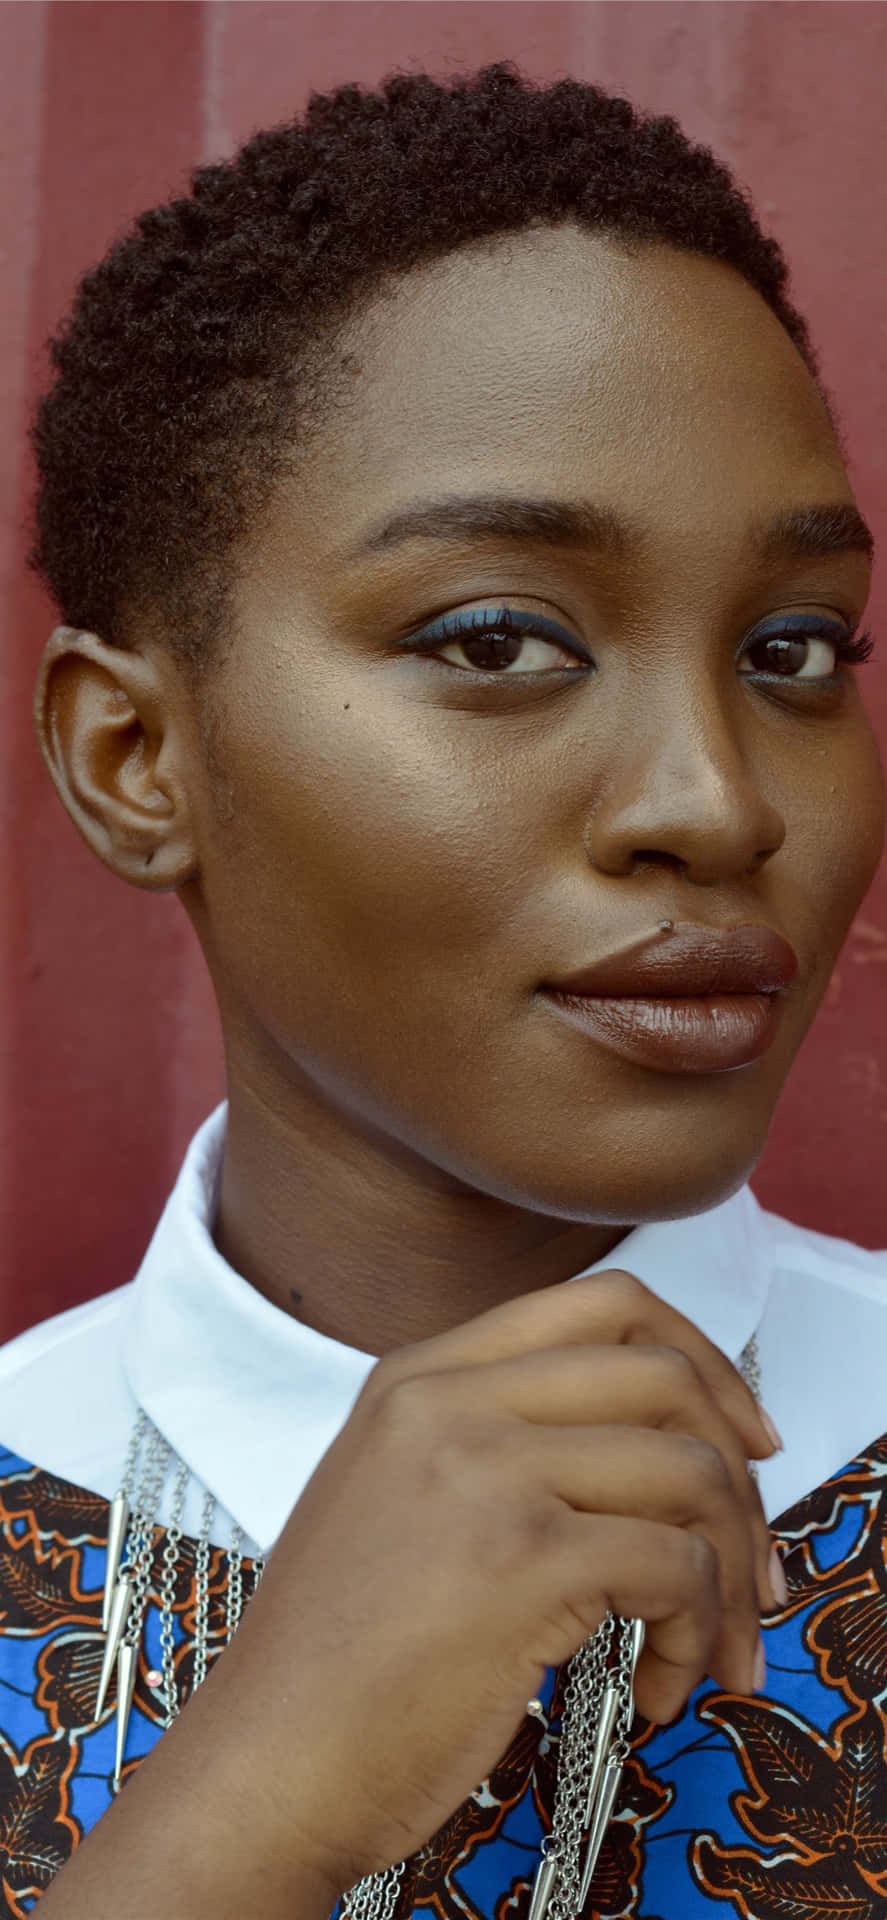 Nigerian Woman with Short Hair Wallpaper